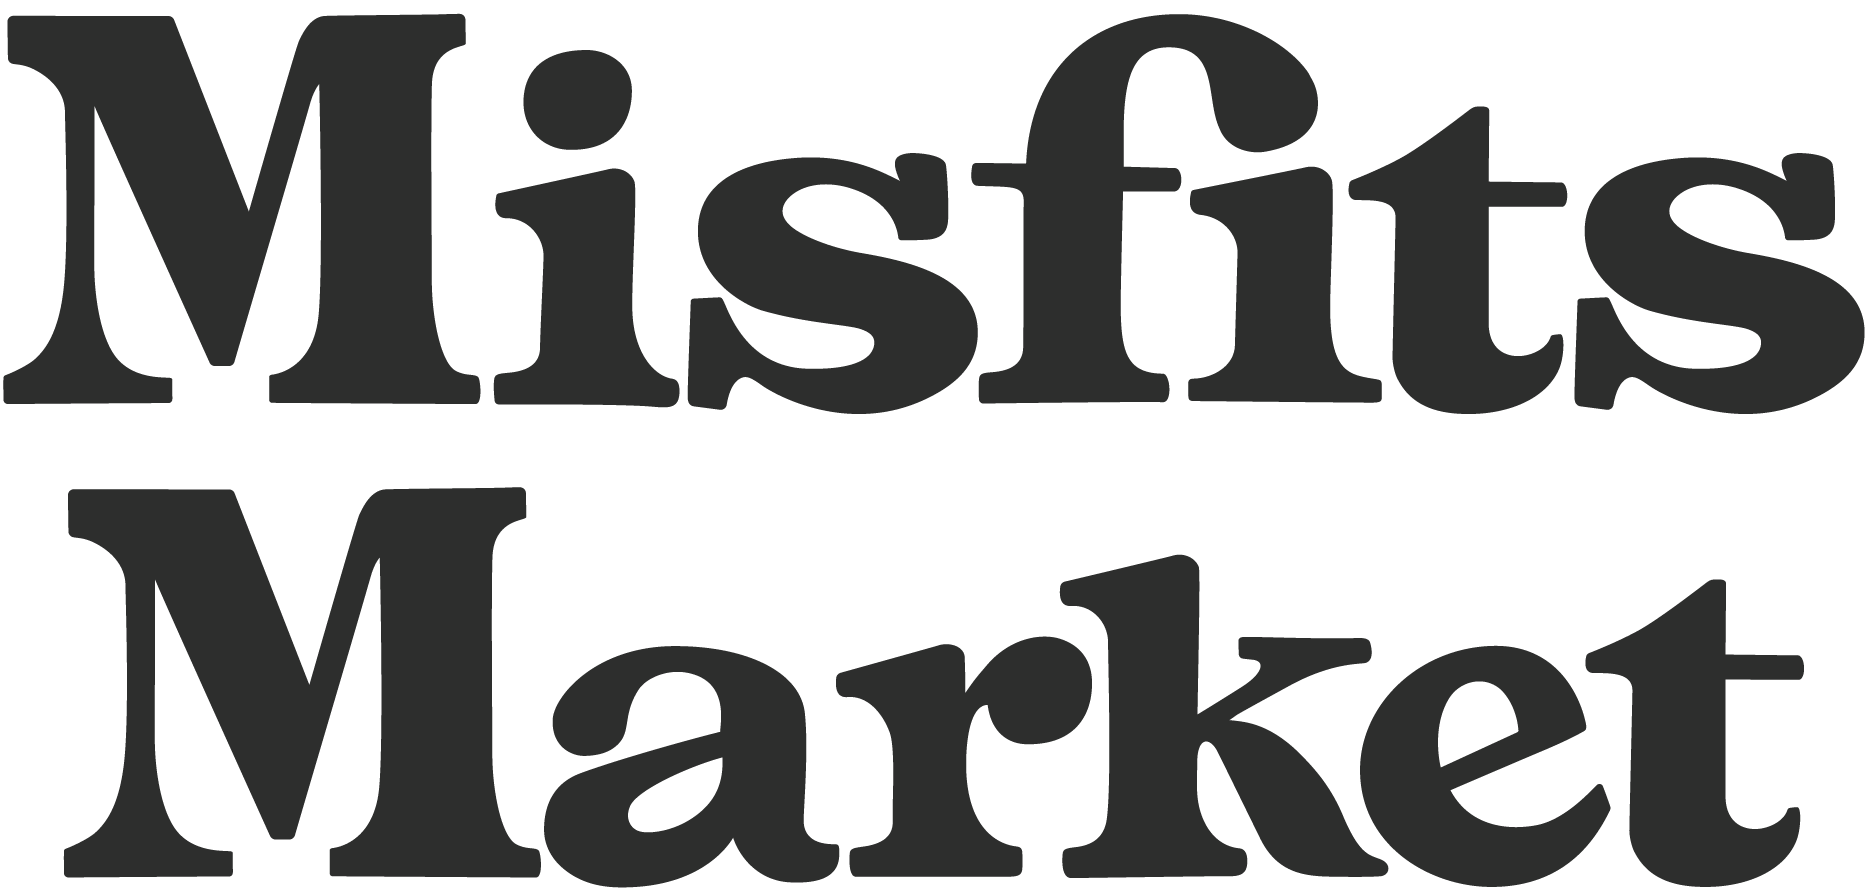 Vision Fund investment portfolio company Misfits Market's logo